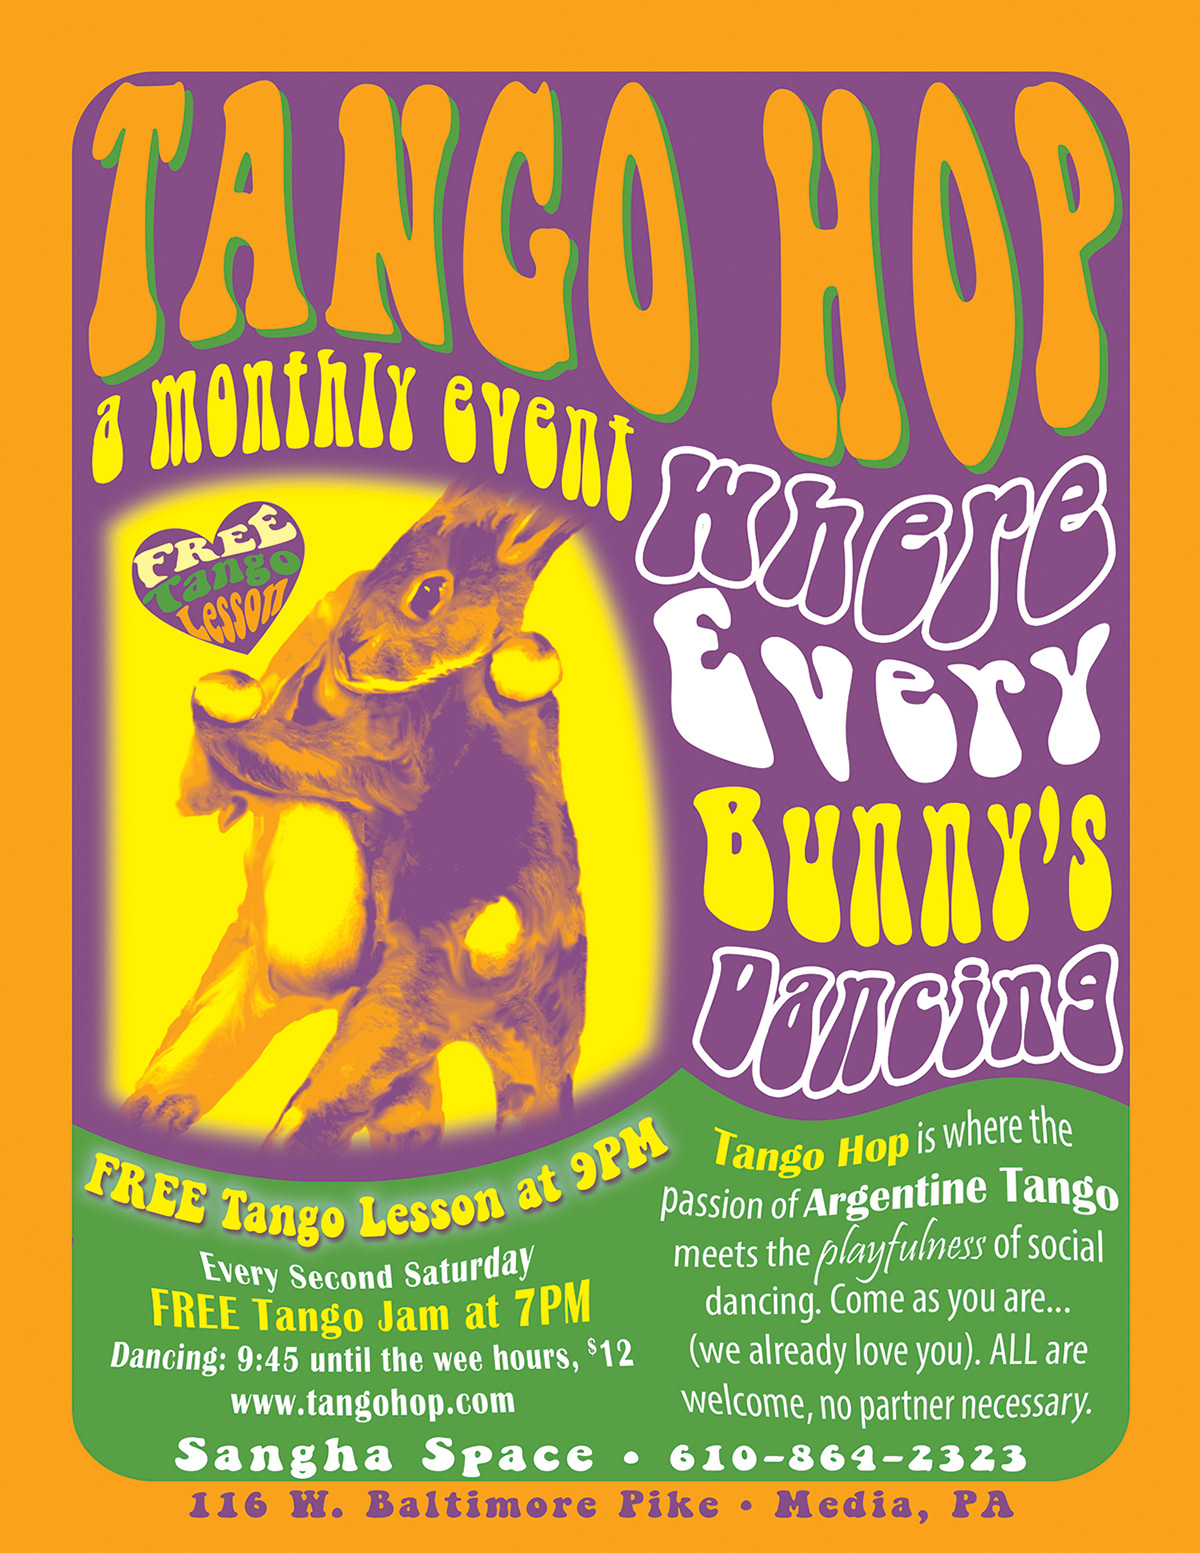 bunny dancing 60s rock poster flyer orange purple green tango yellow